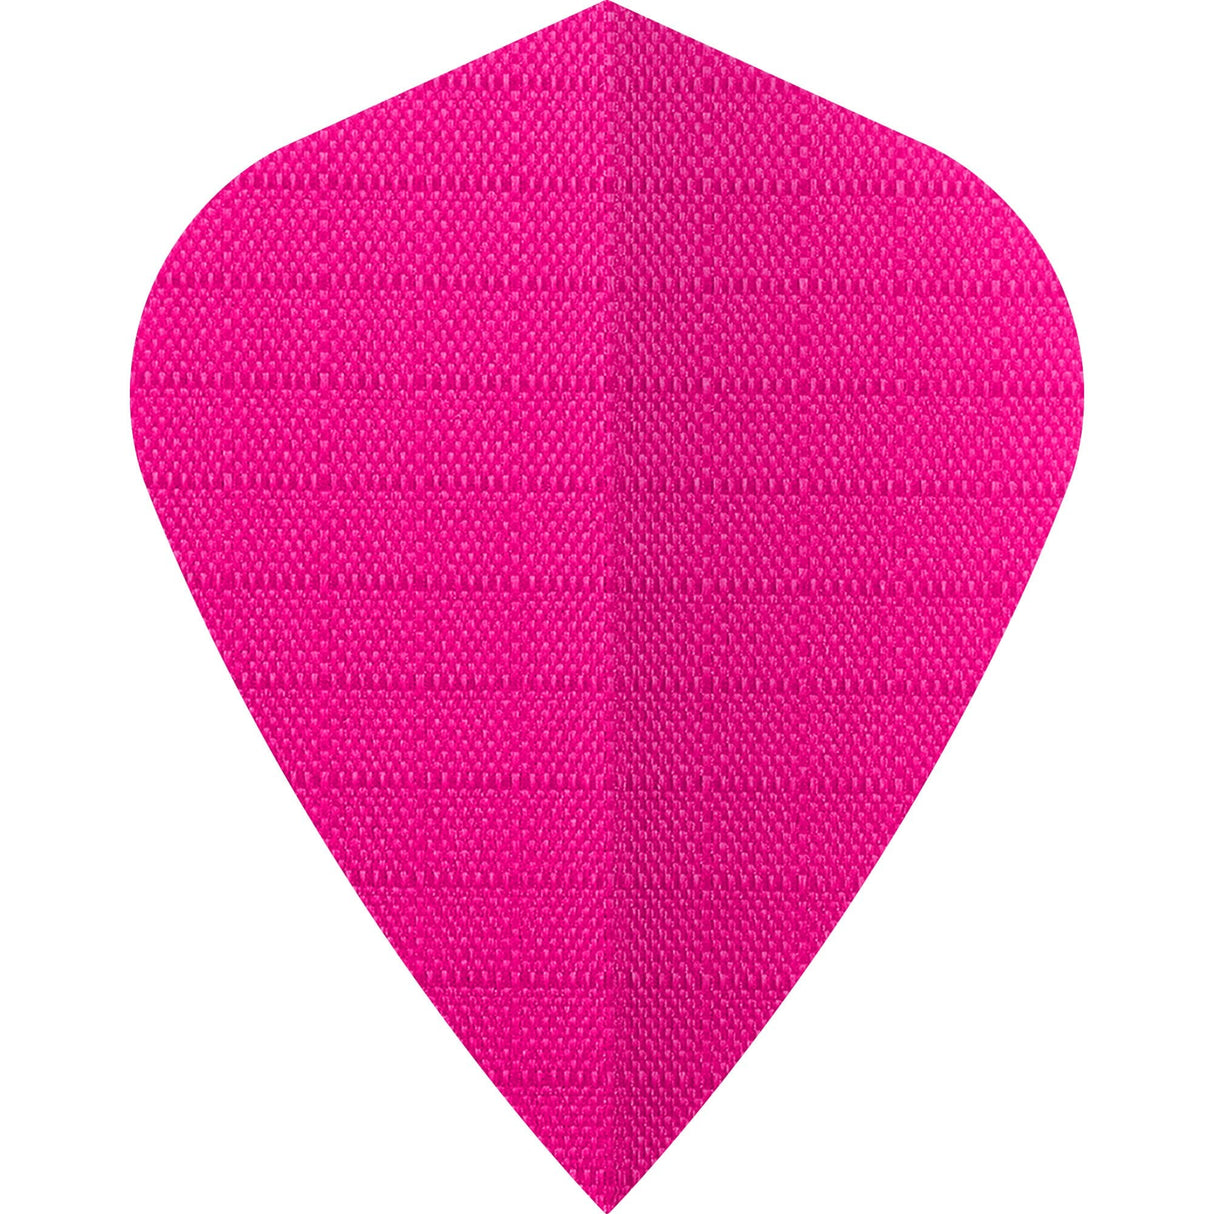 Designa Dart Flights - Fabric Rip Stop Nylon - Longlife - Kite Fluro Pink